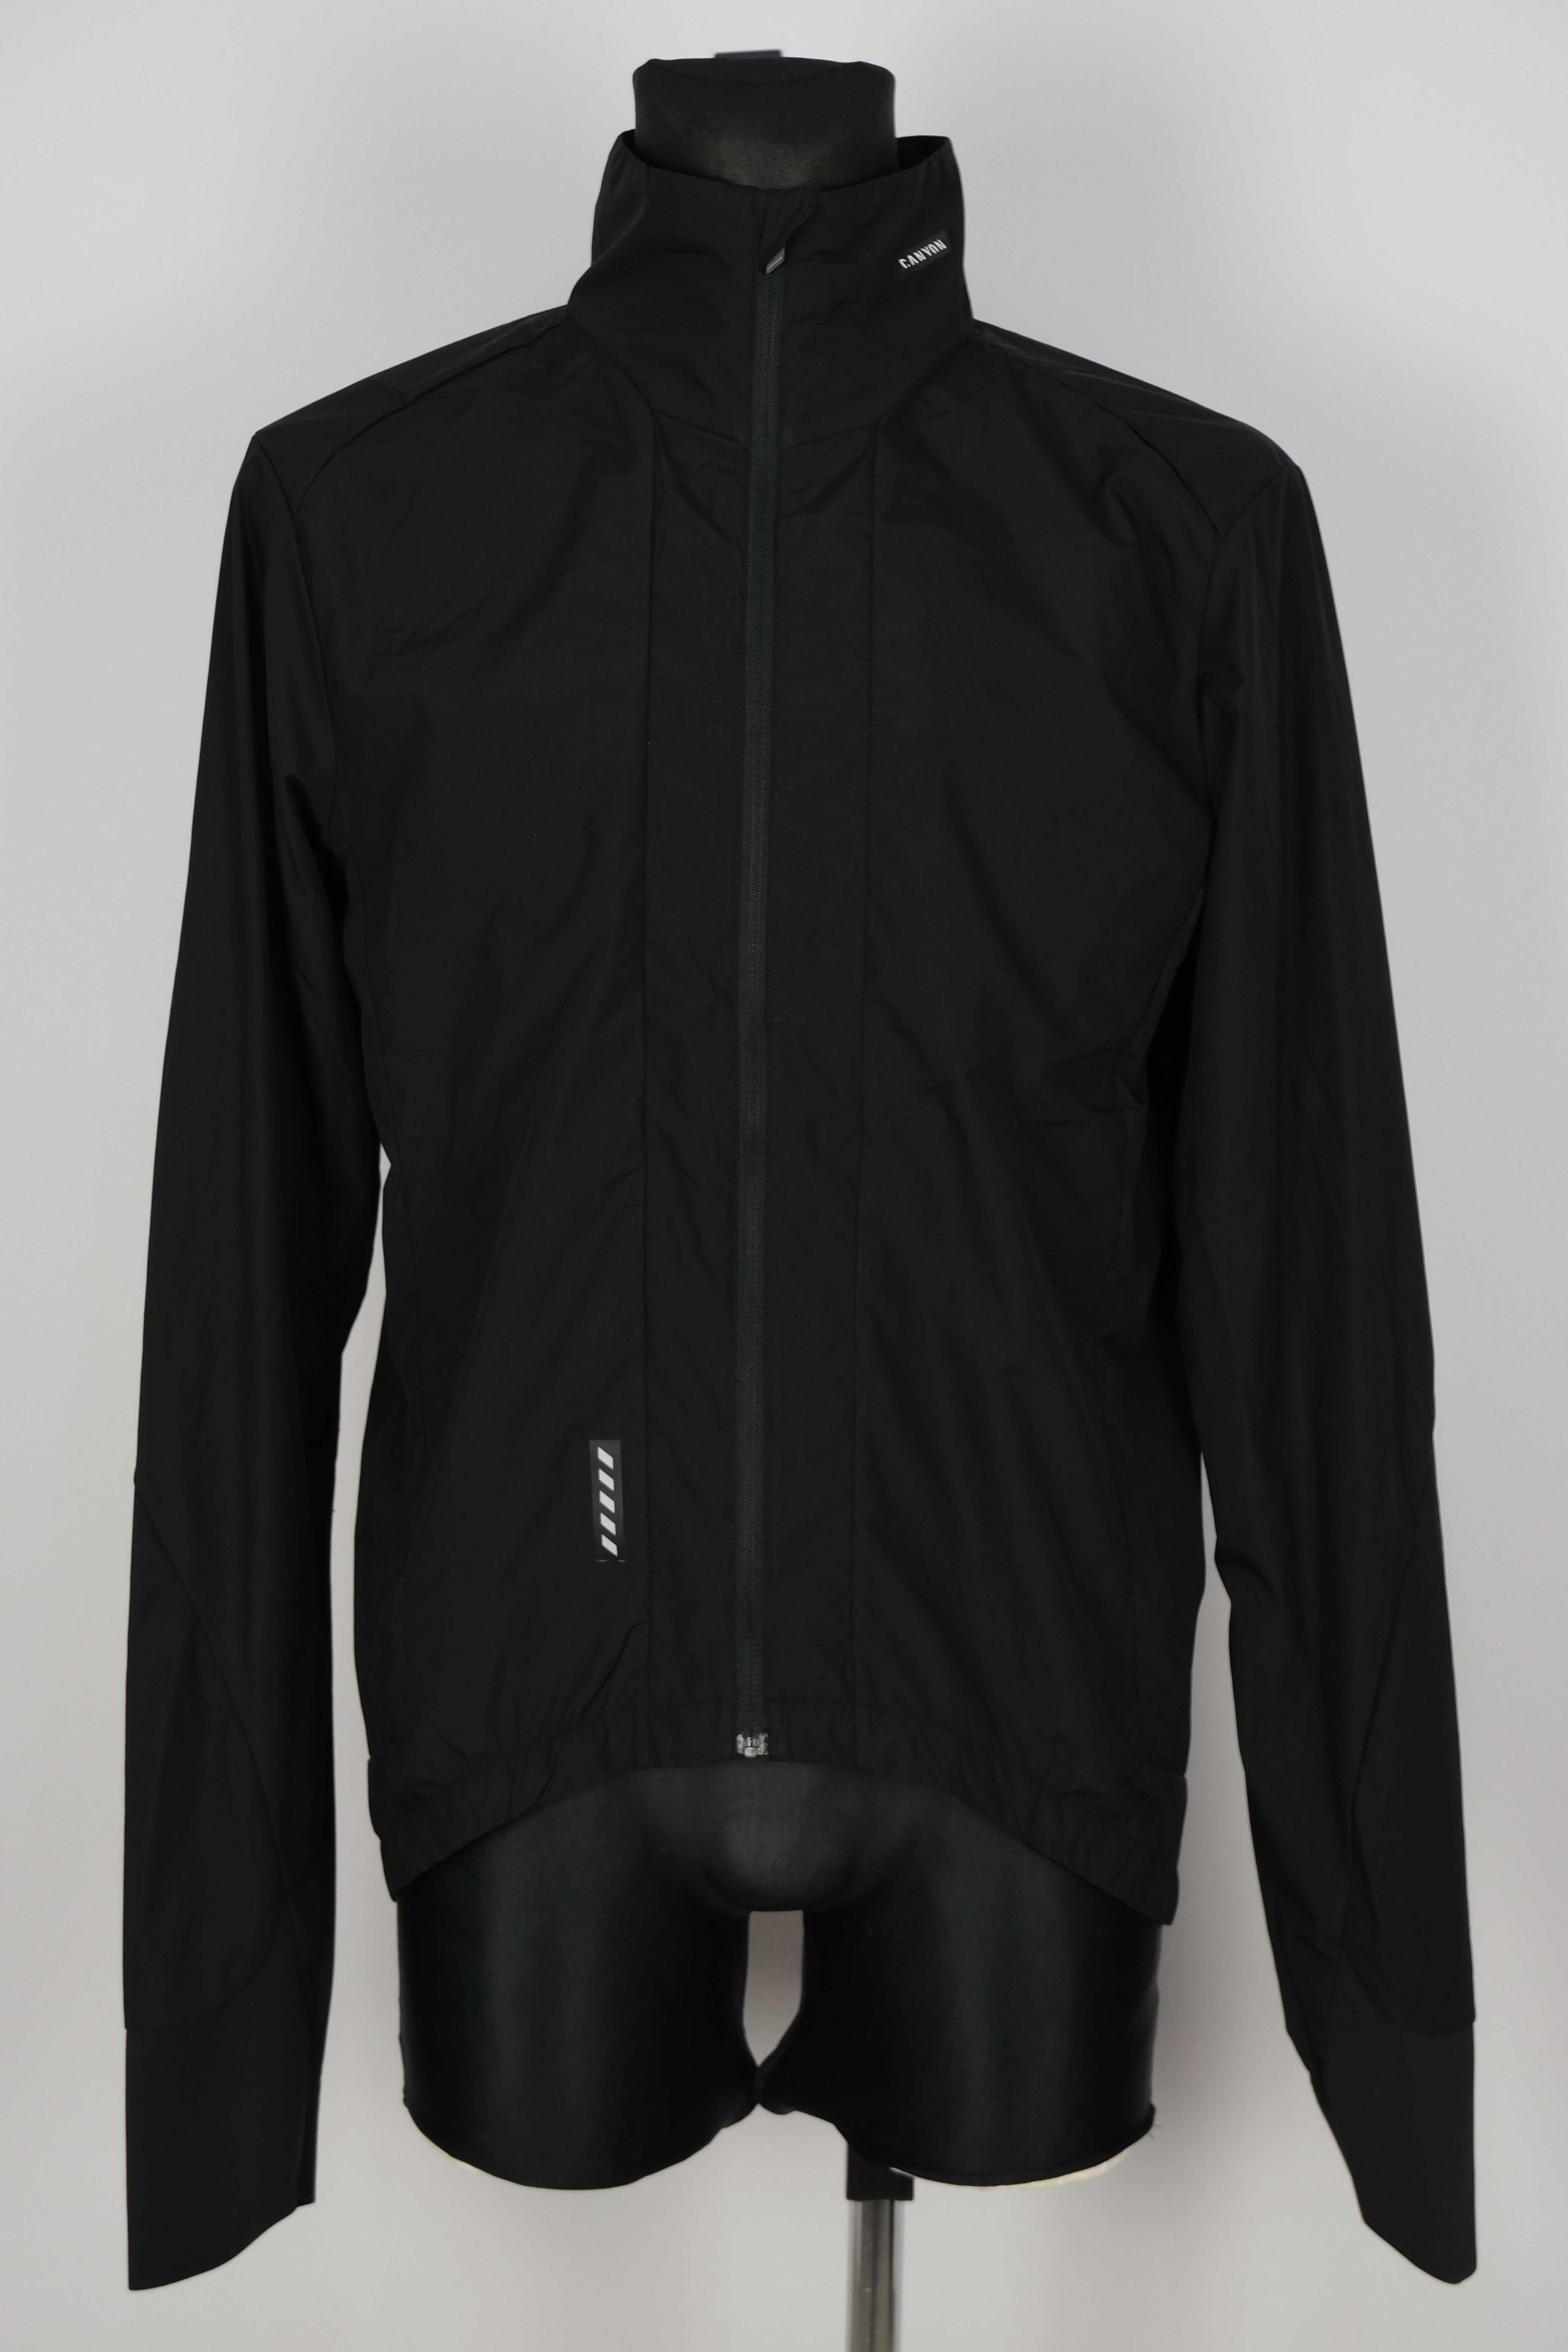 Canyon men's cycling wind jacket r XL st idealny